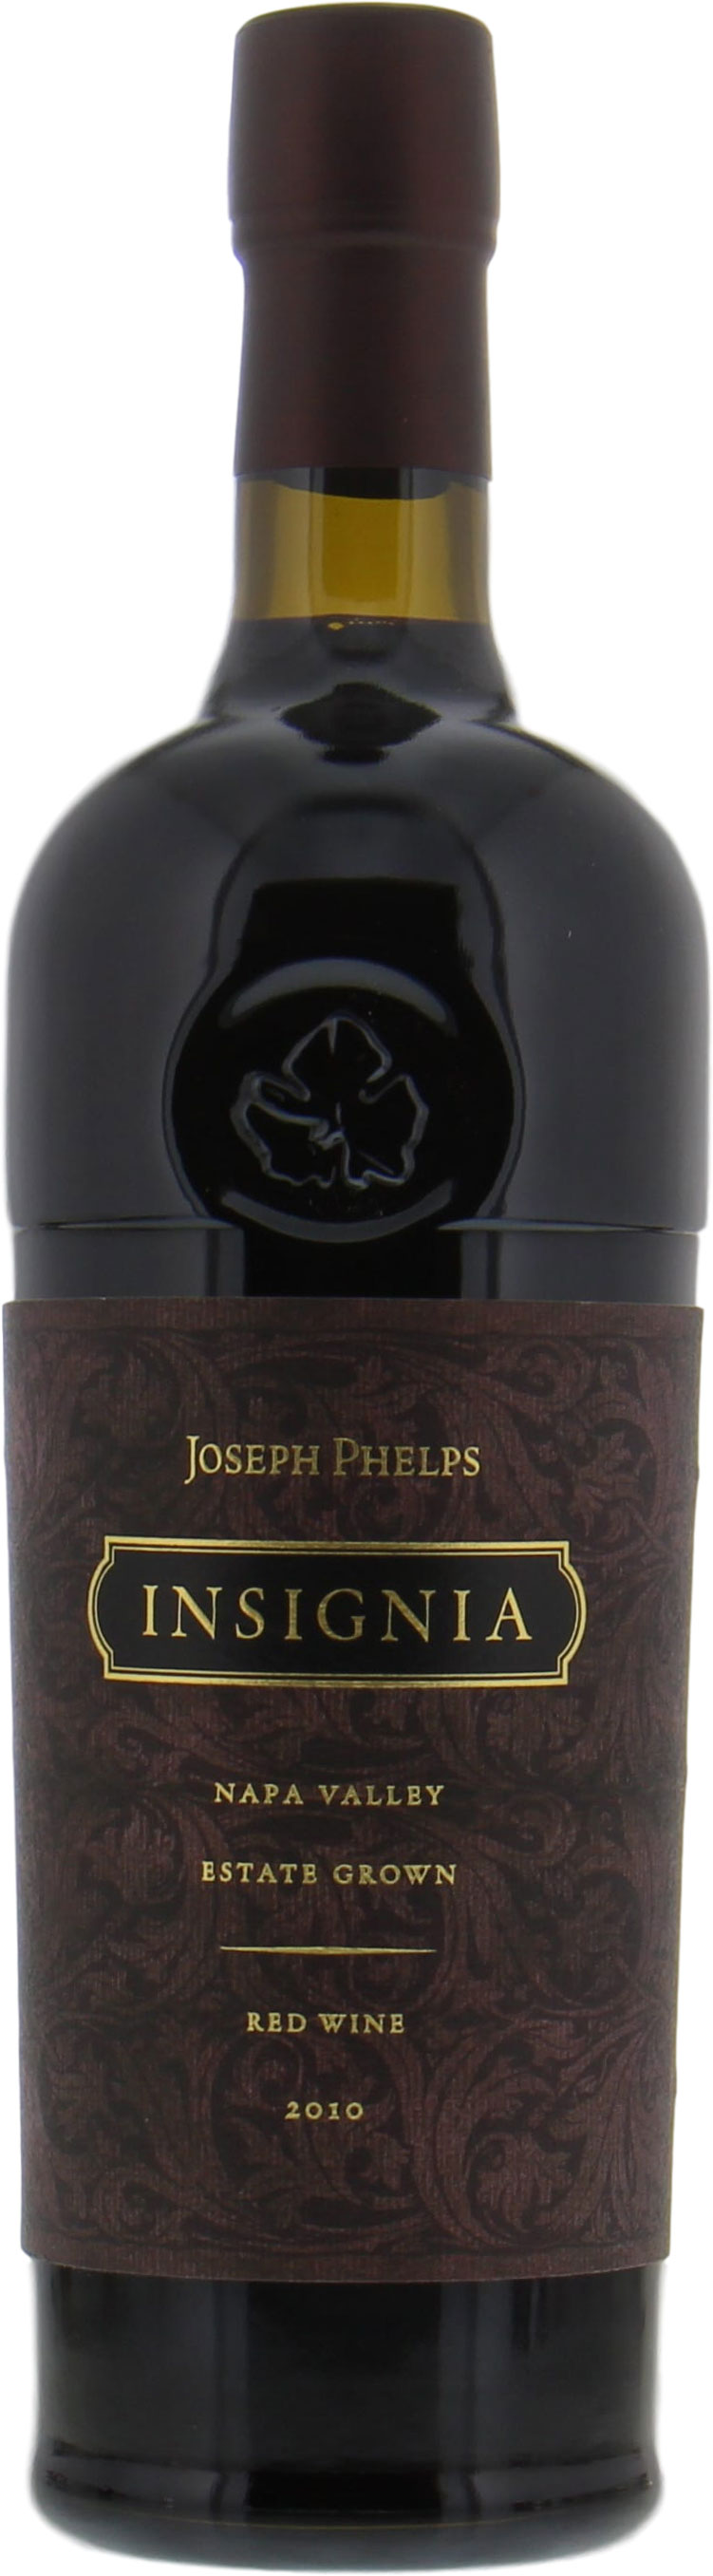 Joseph Phelps - Insignia 2010 Perfect